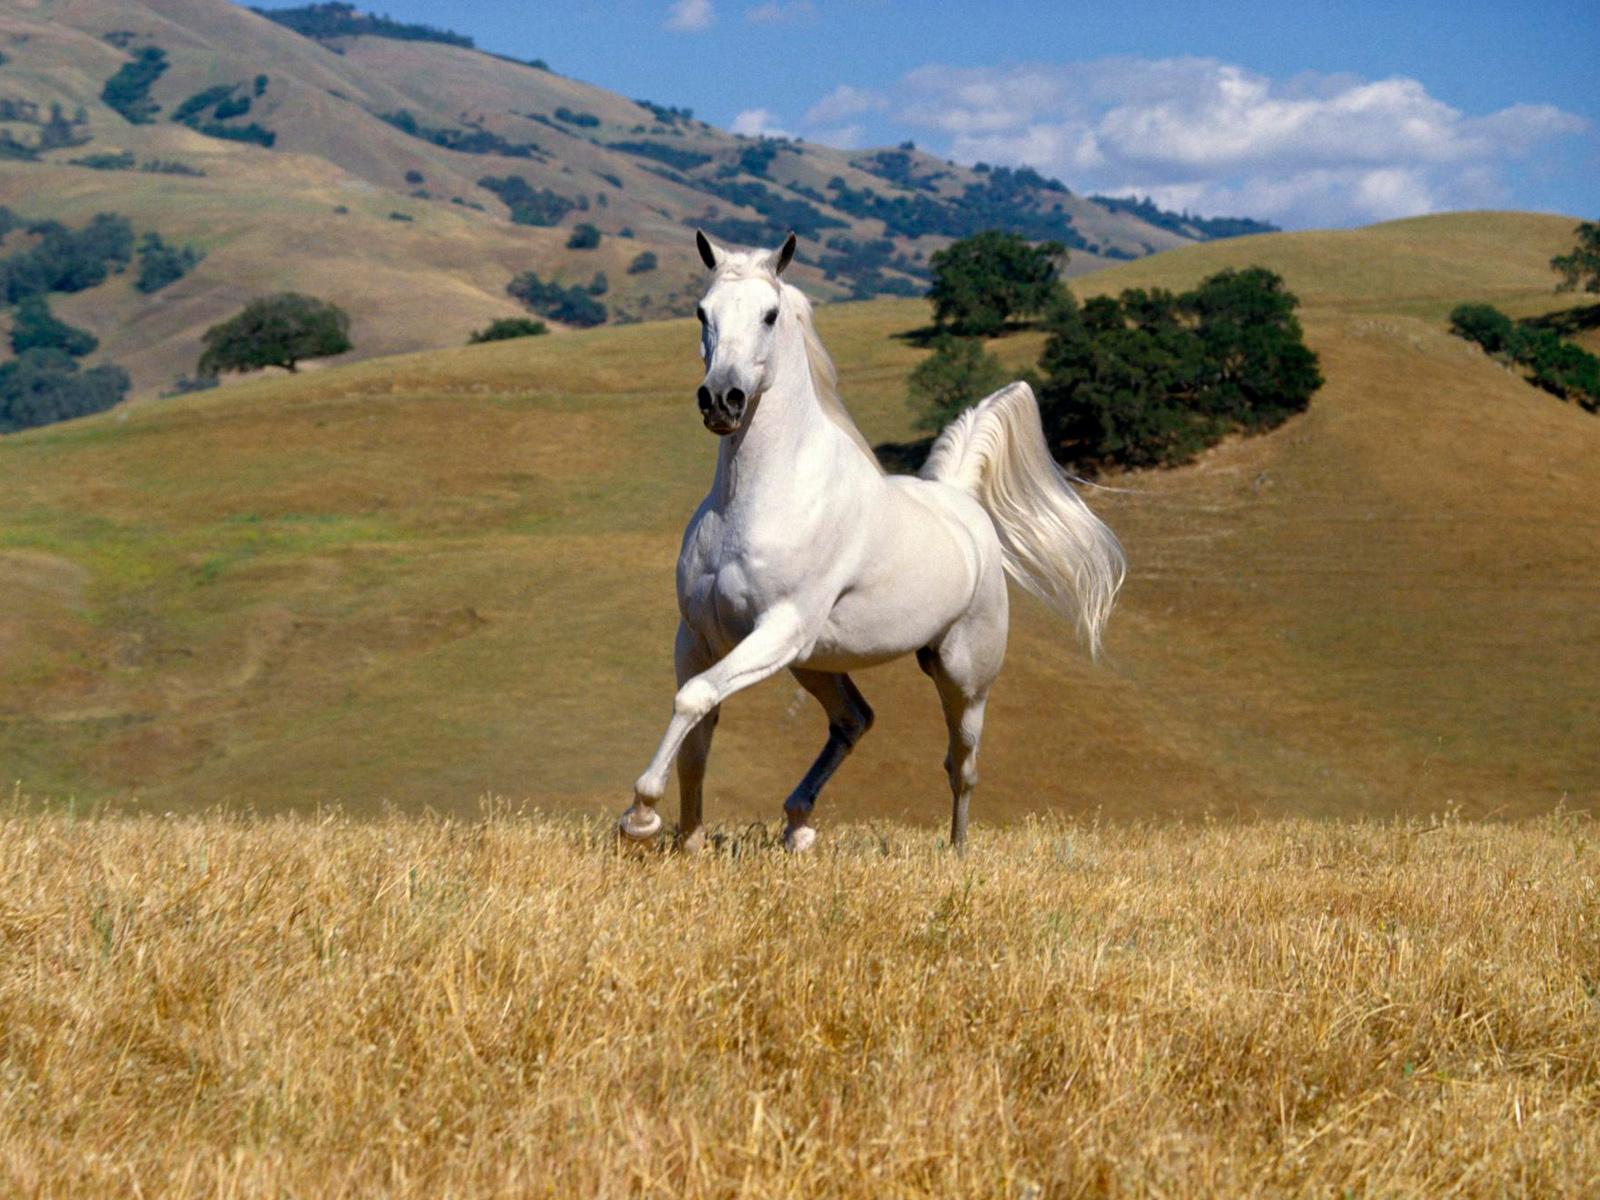 Horses Desktop Wallpaper Image Amp Pictures Becuo